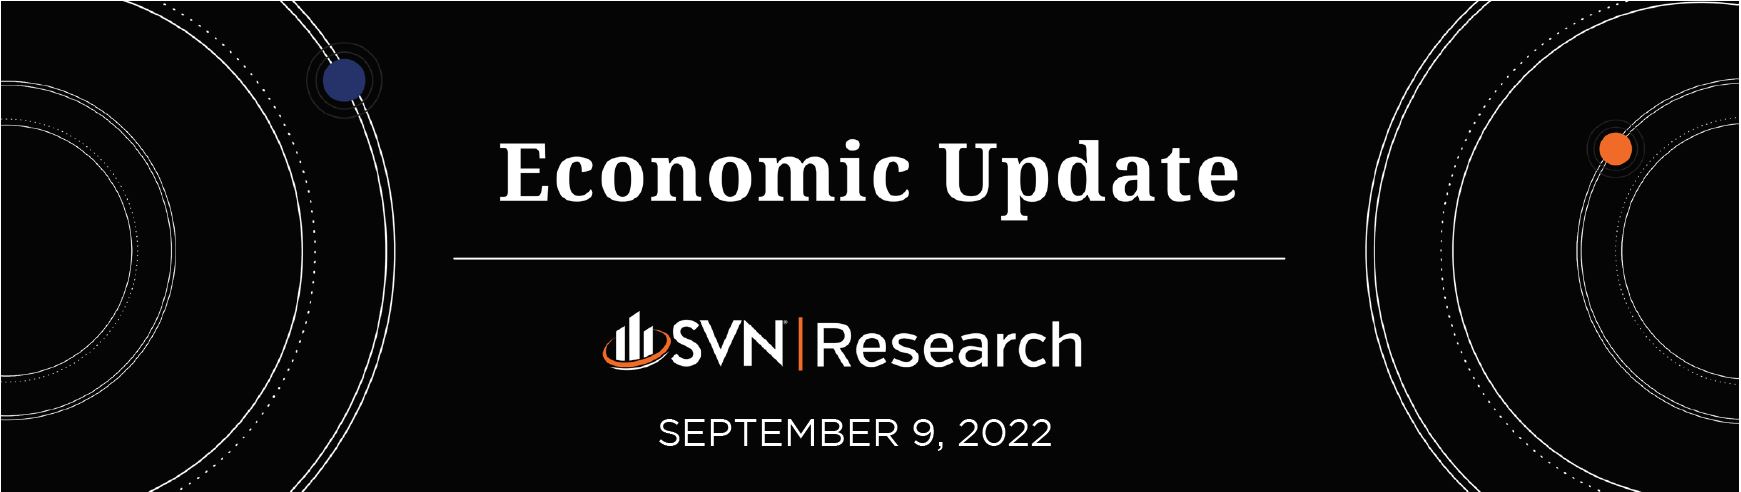 SVN | Research Economic Update 9.9.2022